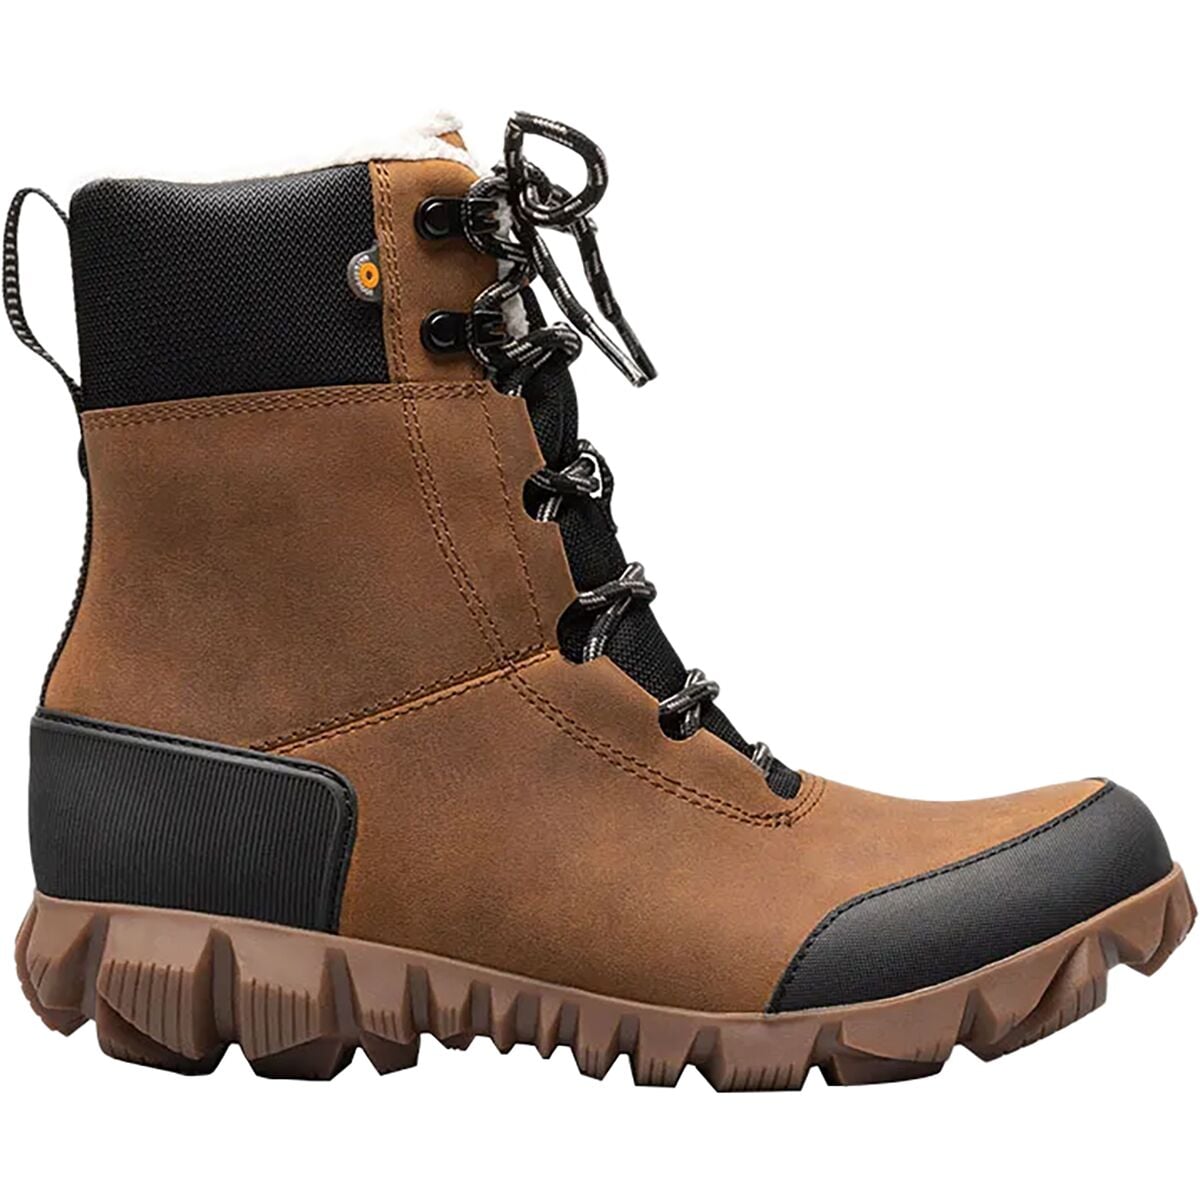 Bogs Arcata Urban Leather Tall Boot - Women's